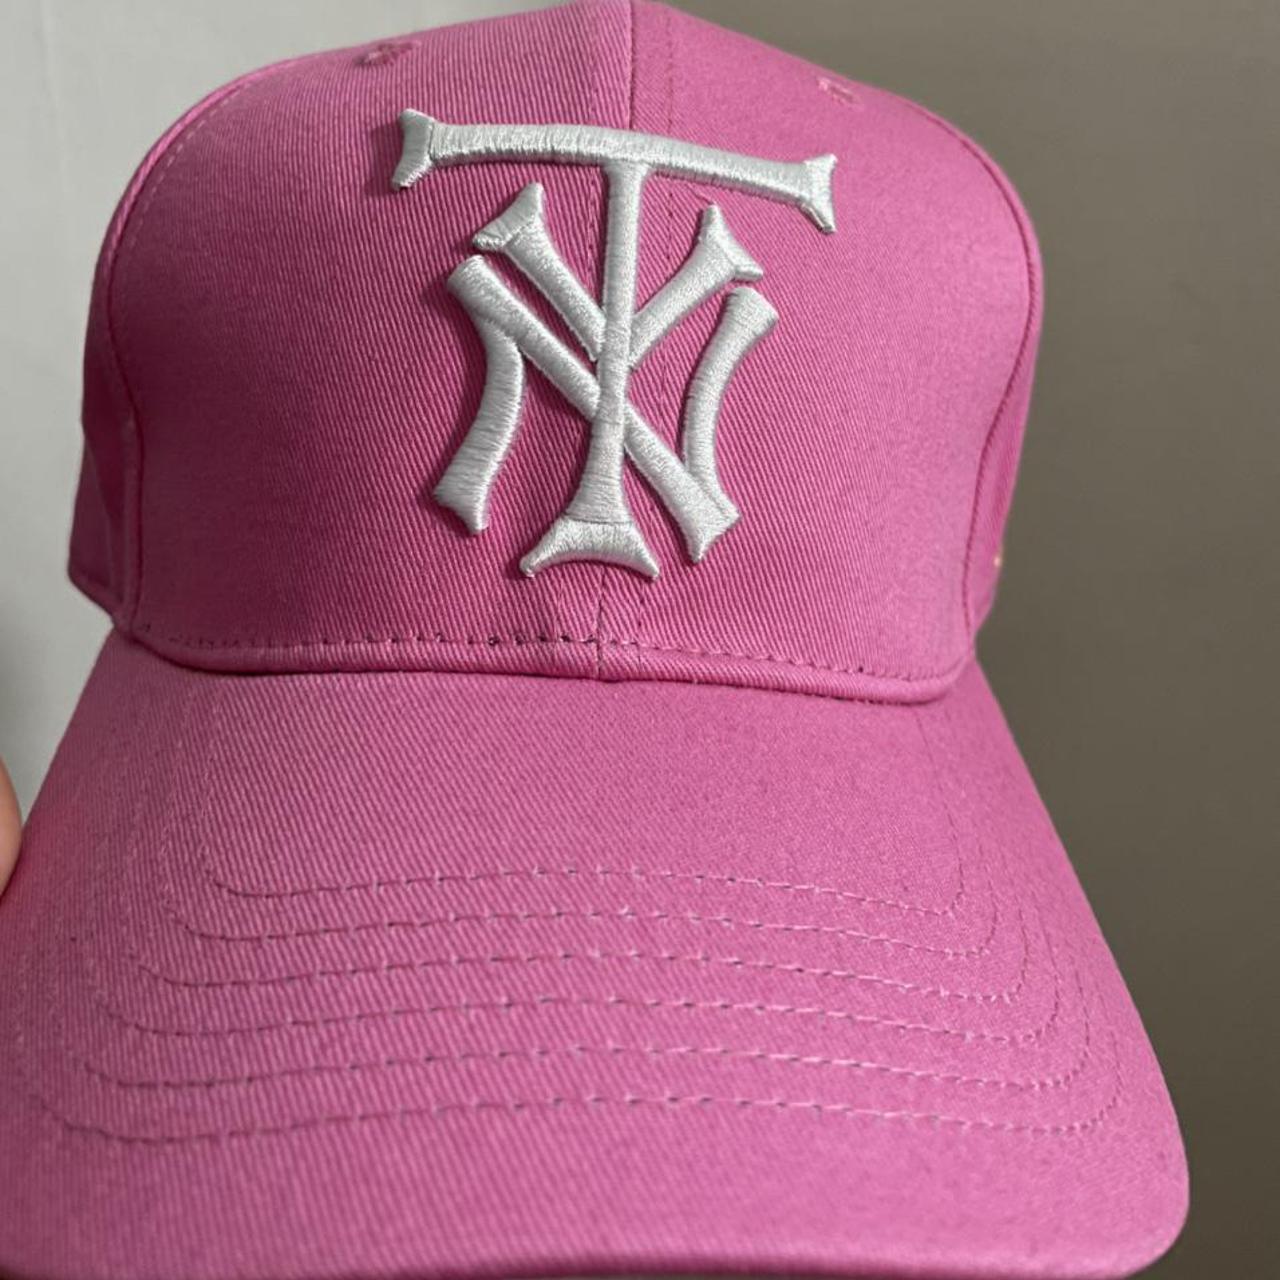 Vintage NY velvet hats Colors red and pink Never - Depop